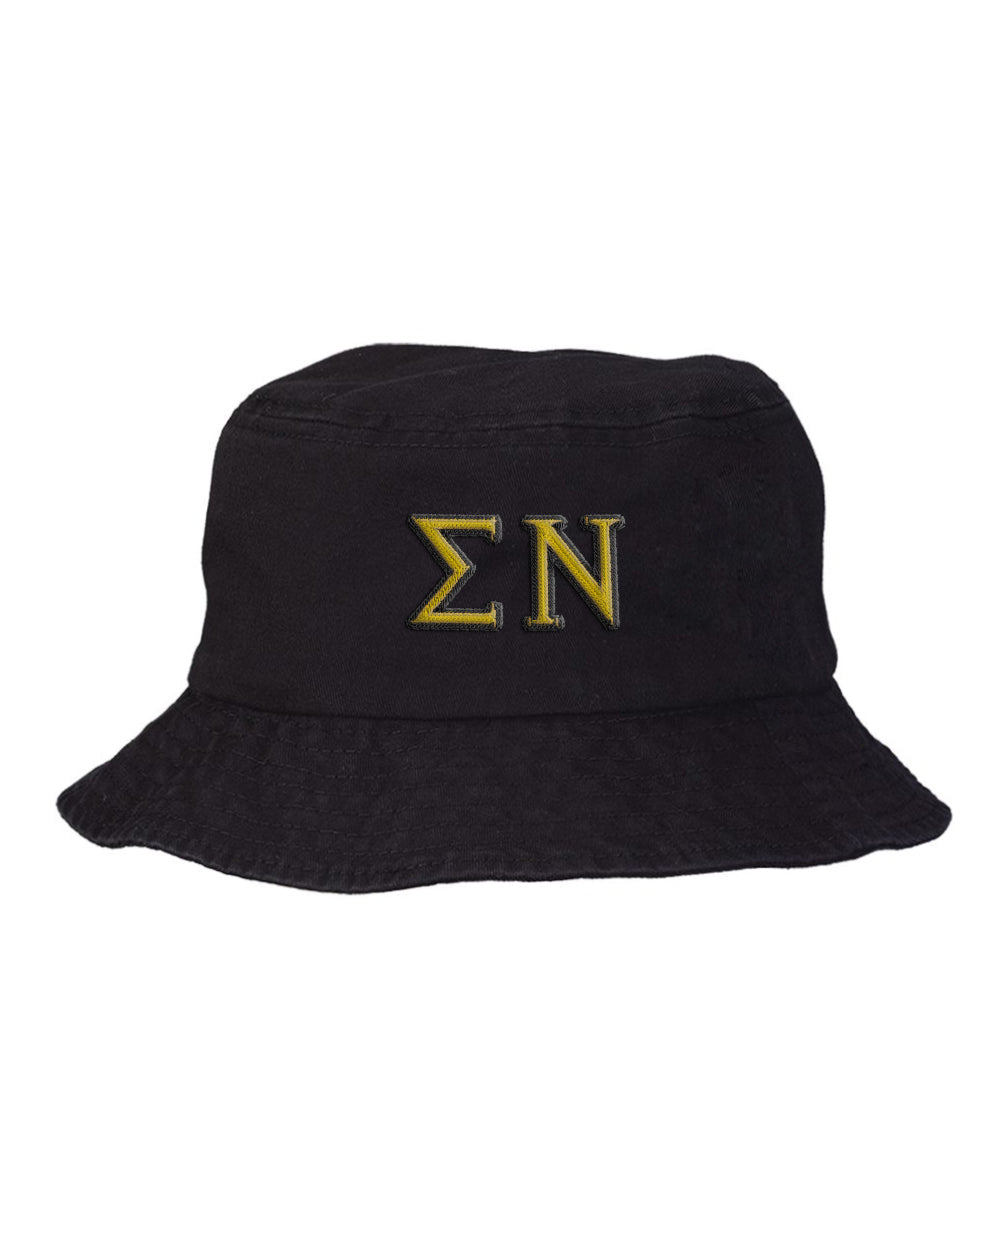 Sigma Nu Embroidered Bucket Hat